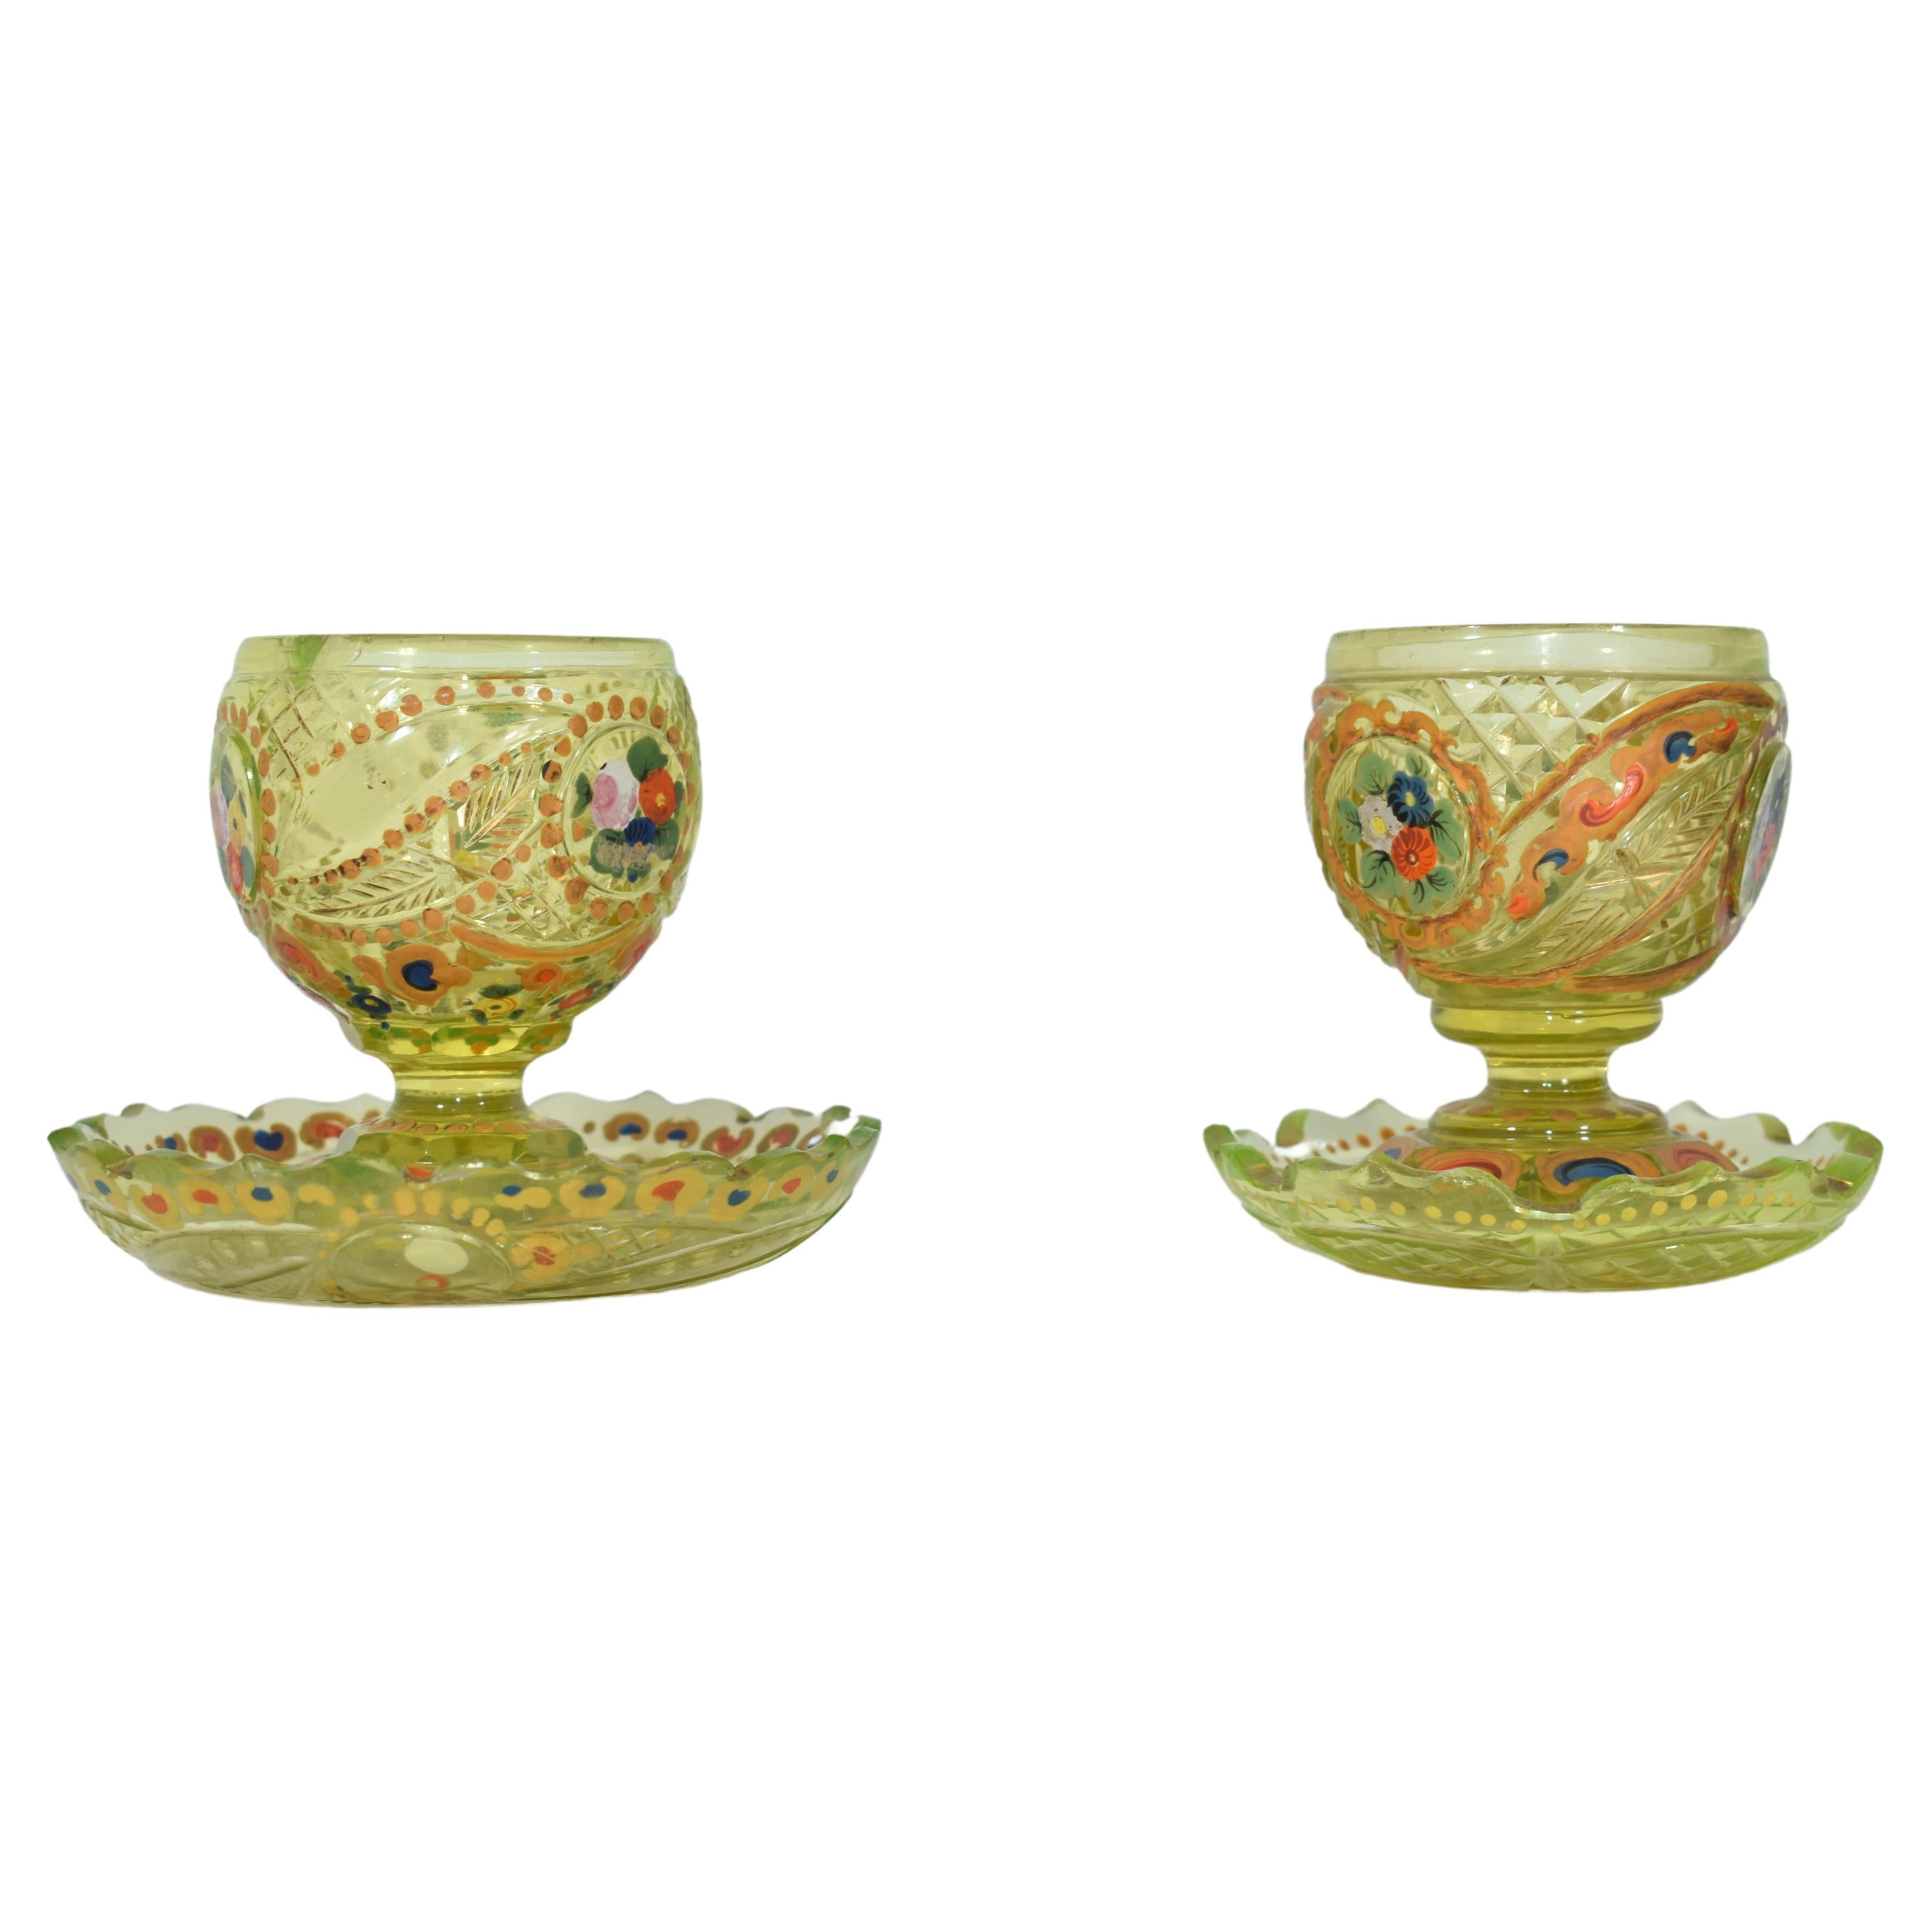 Two Antique Islamic Bohemian Uranium Glass Sugar Bowls, 19th Century For Sale